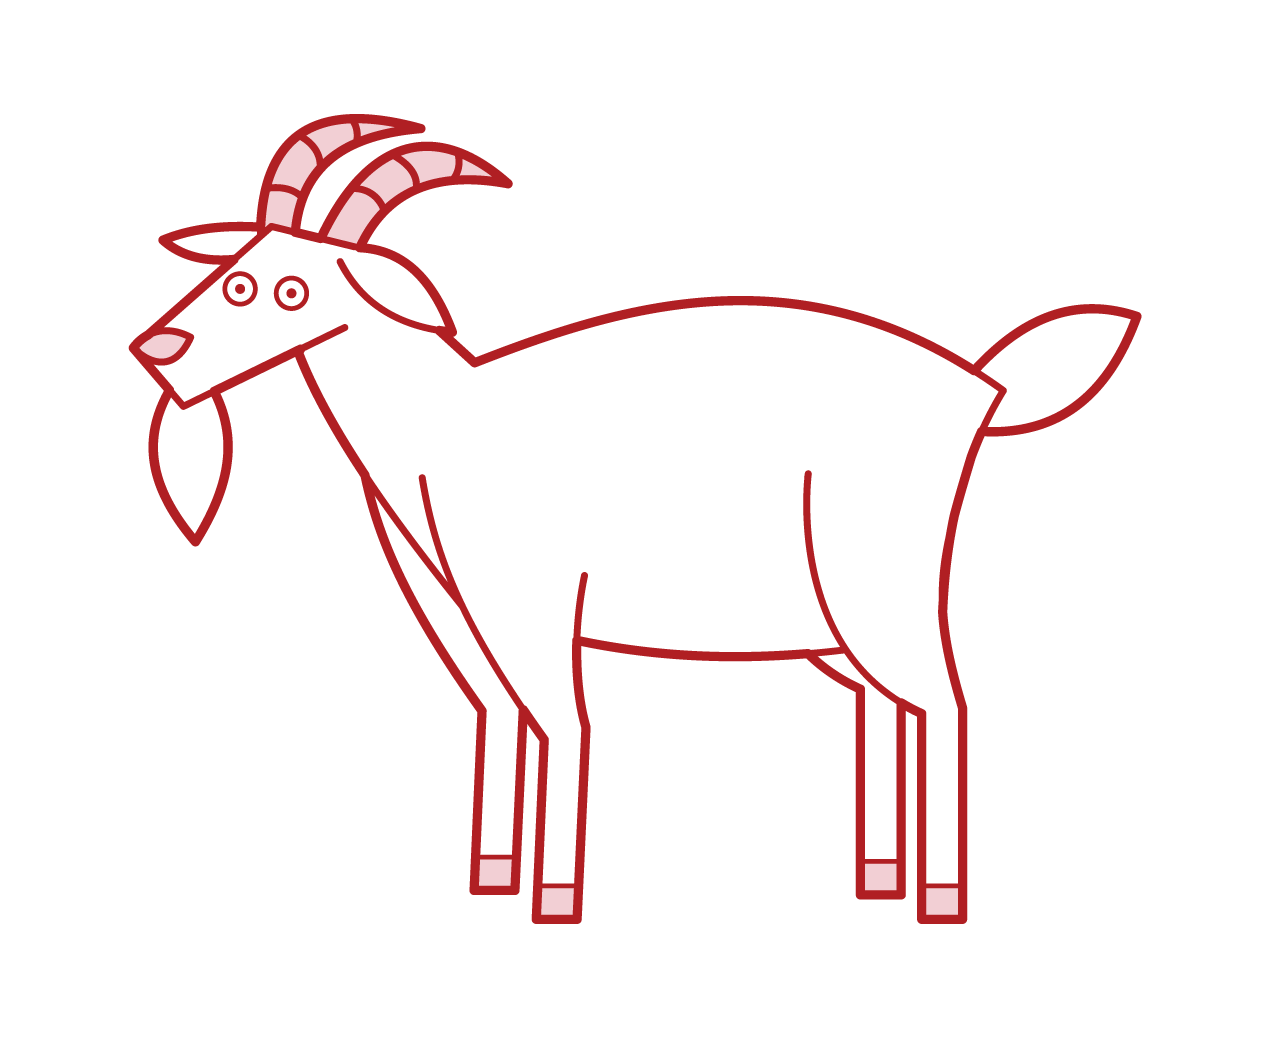 Goat Illustration